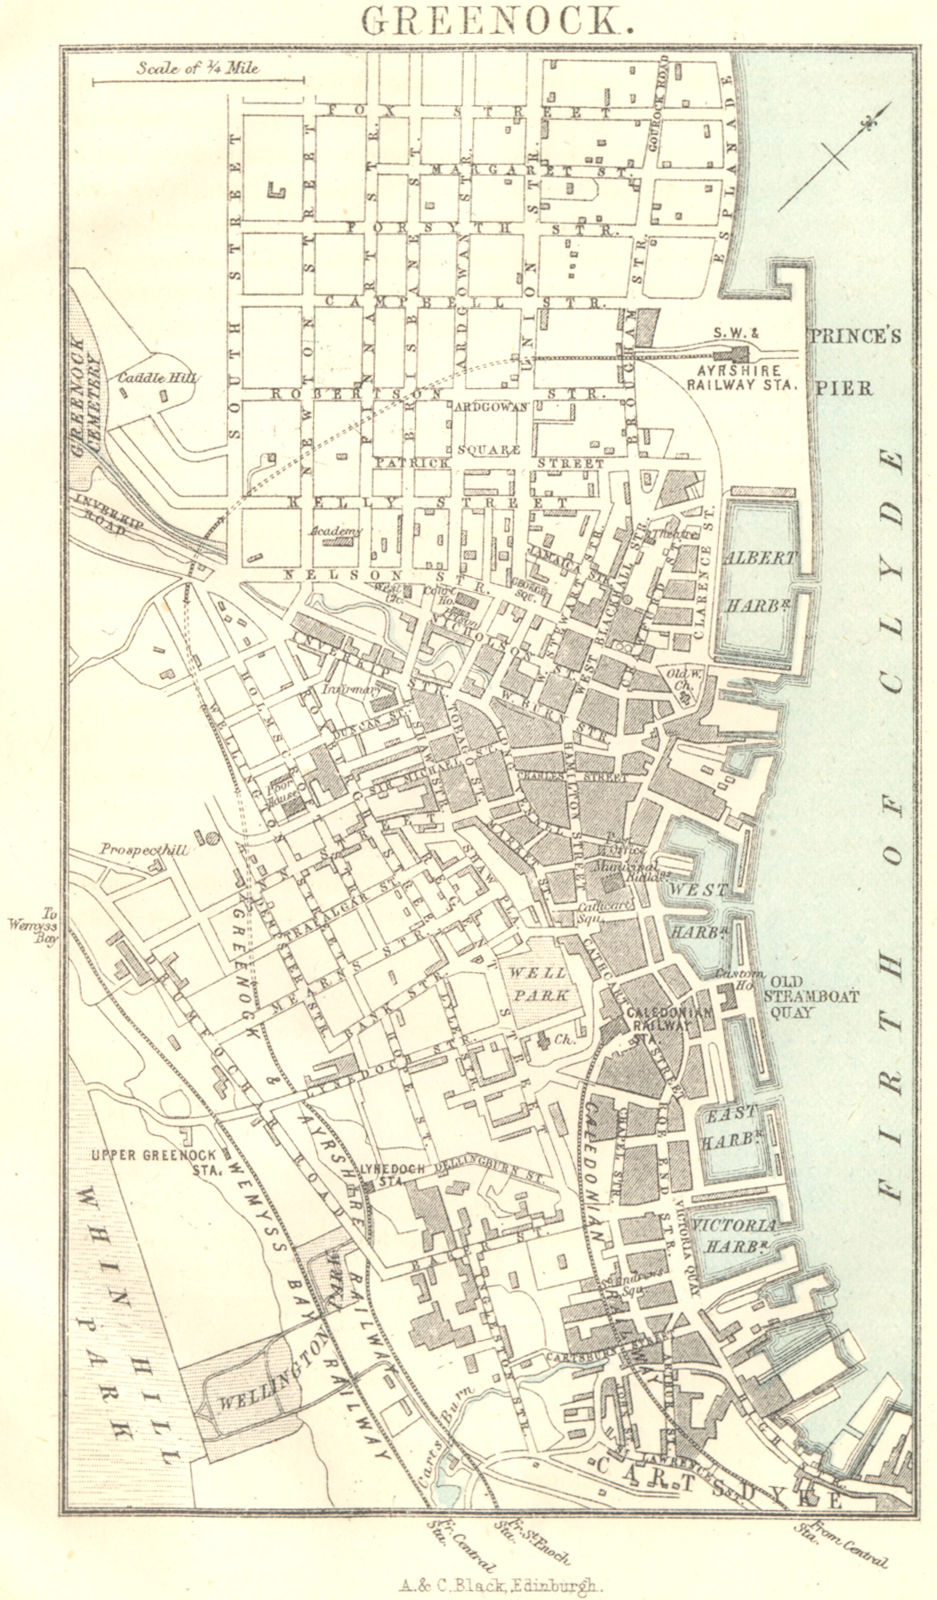 Associate Product SCOTLAND. Greenock town plan 1887 old antique vintage map chart